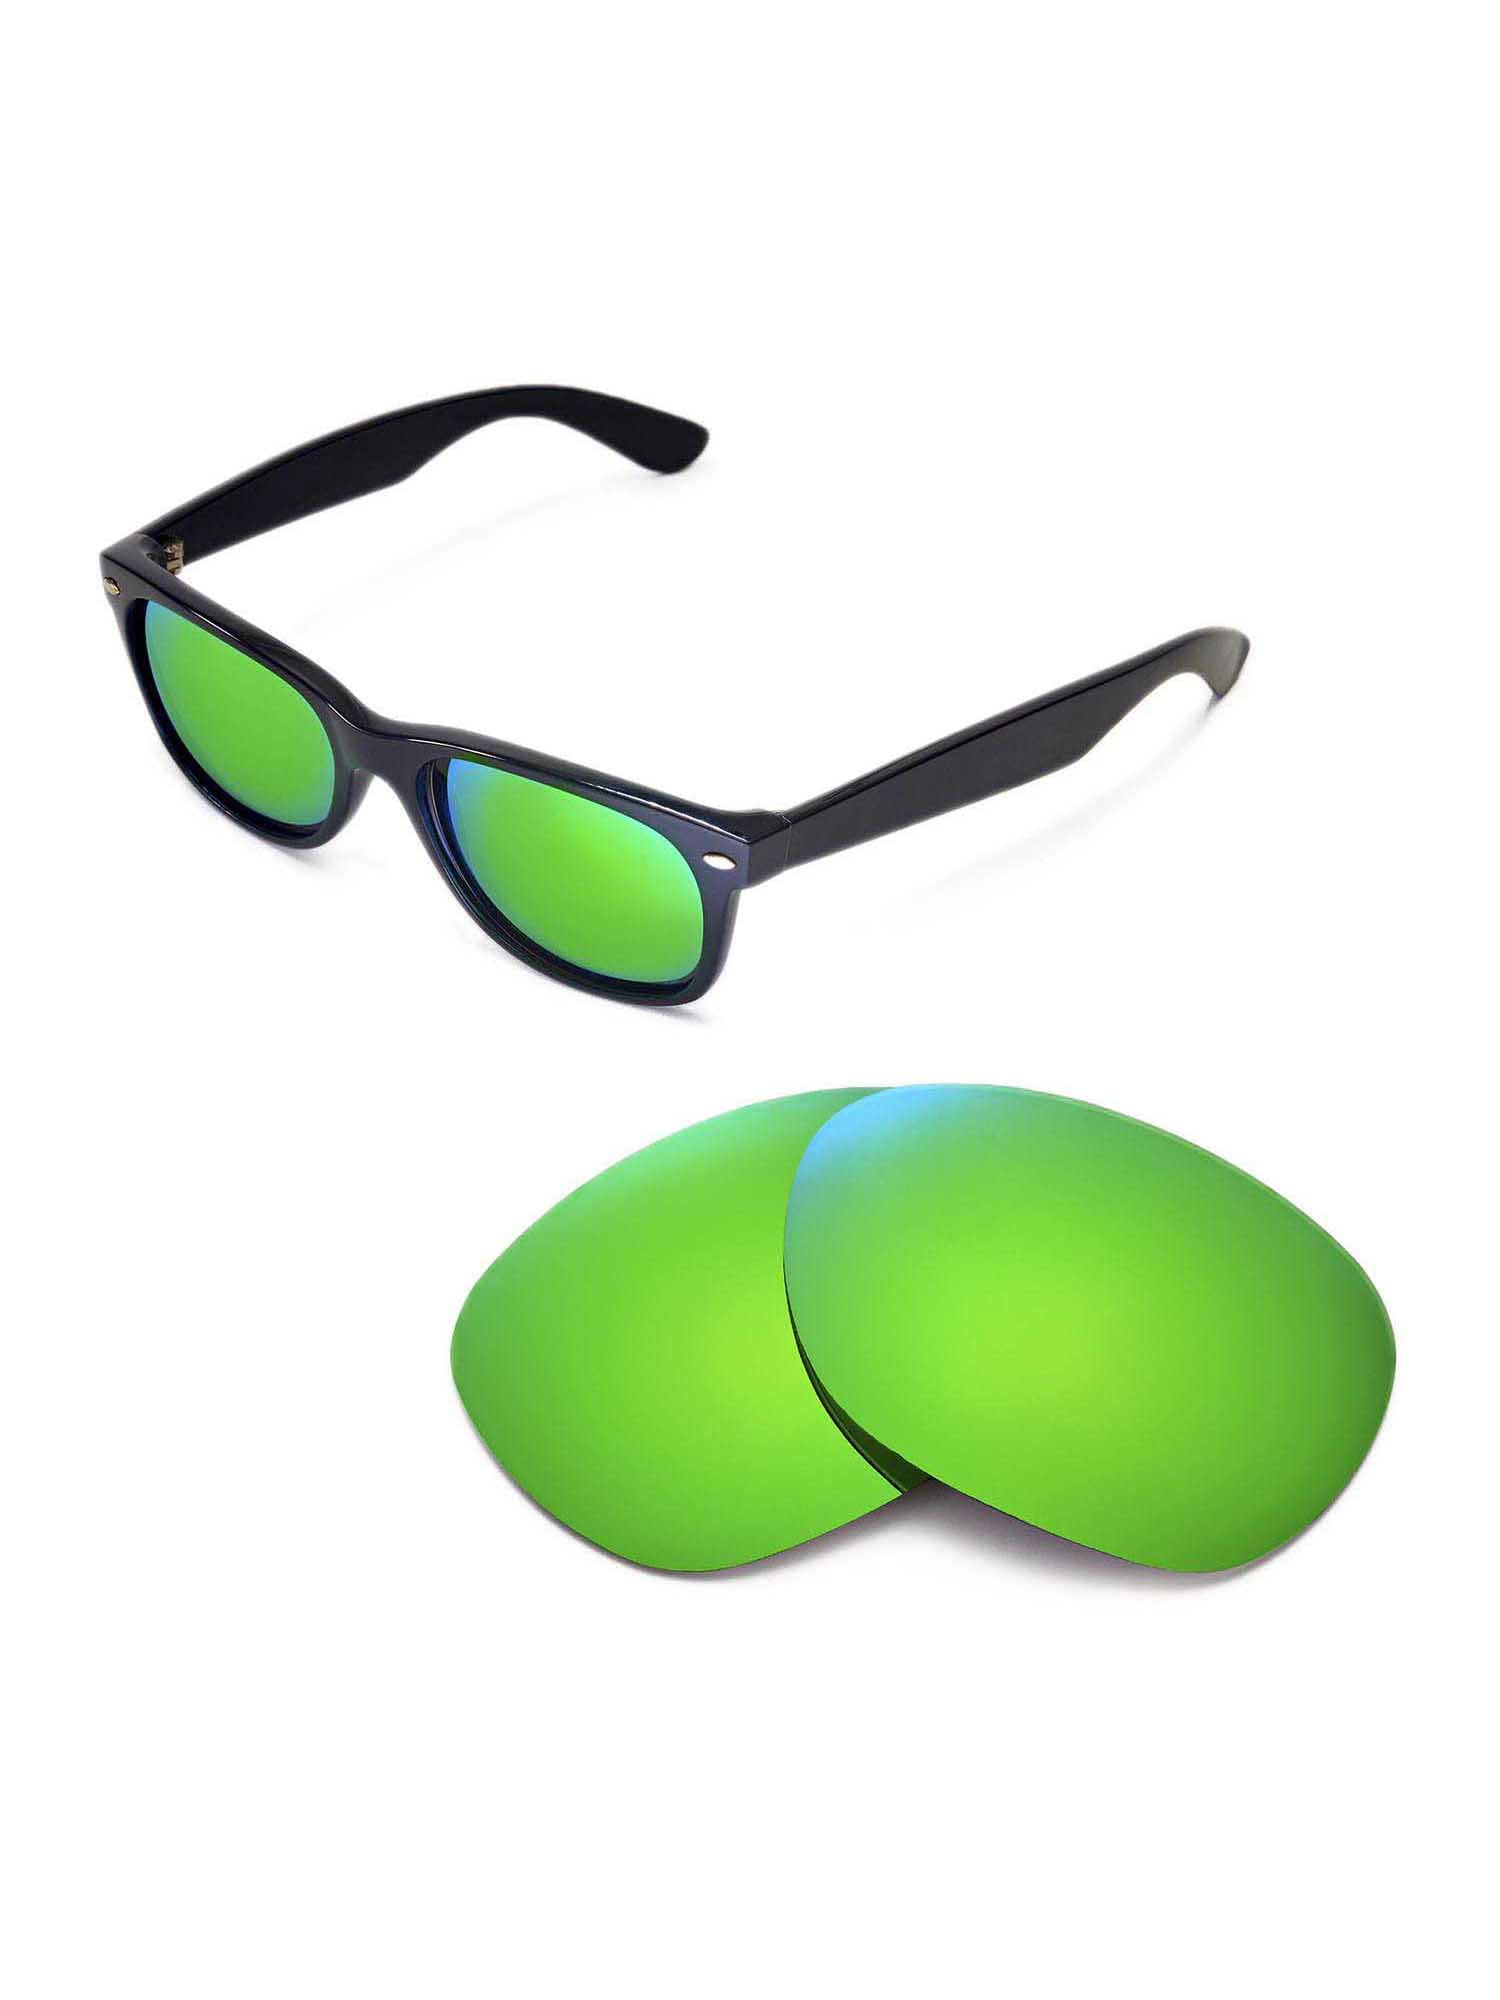 55mm wayfarer sunglasses